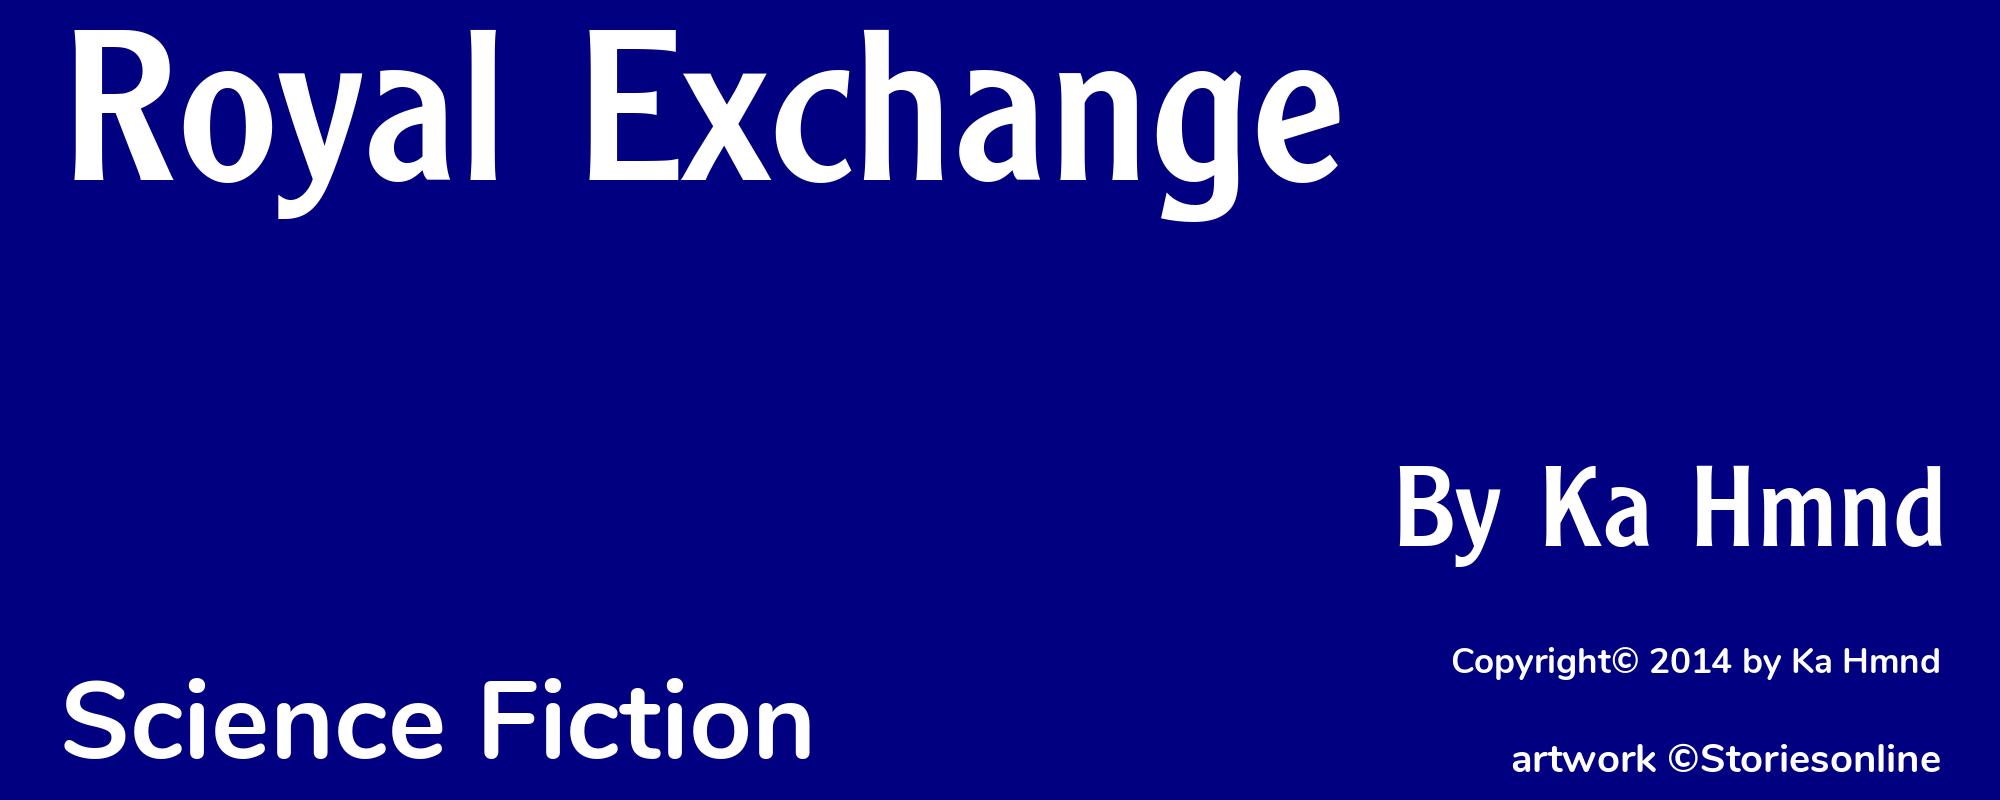 Royal Exchange - Cover